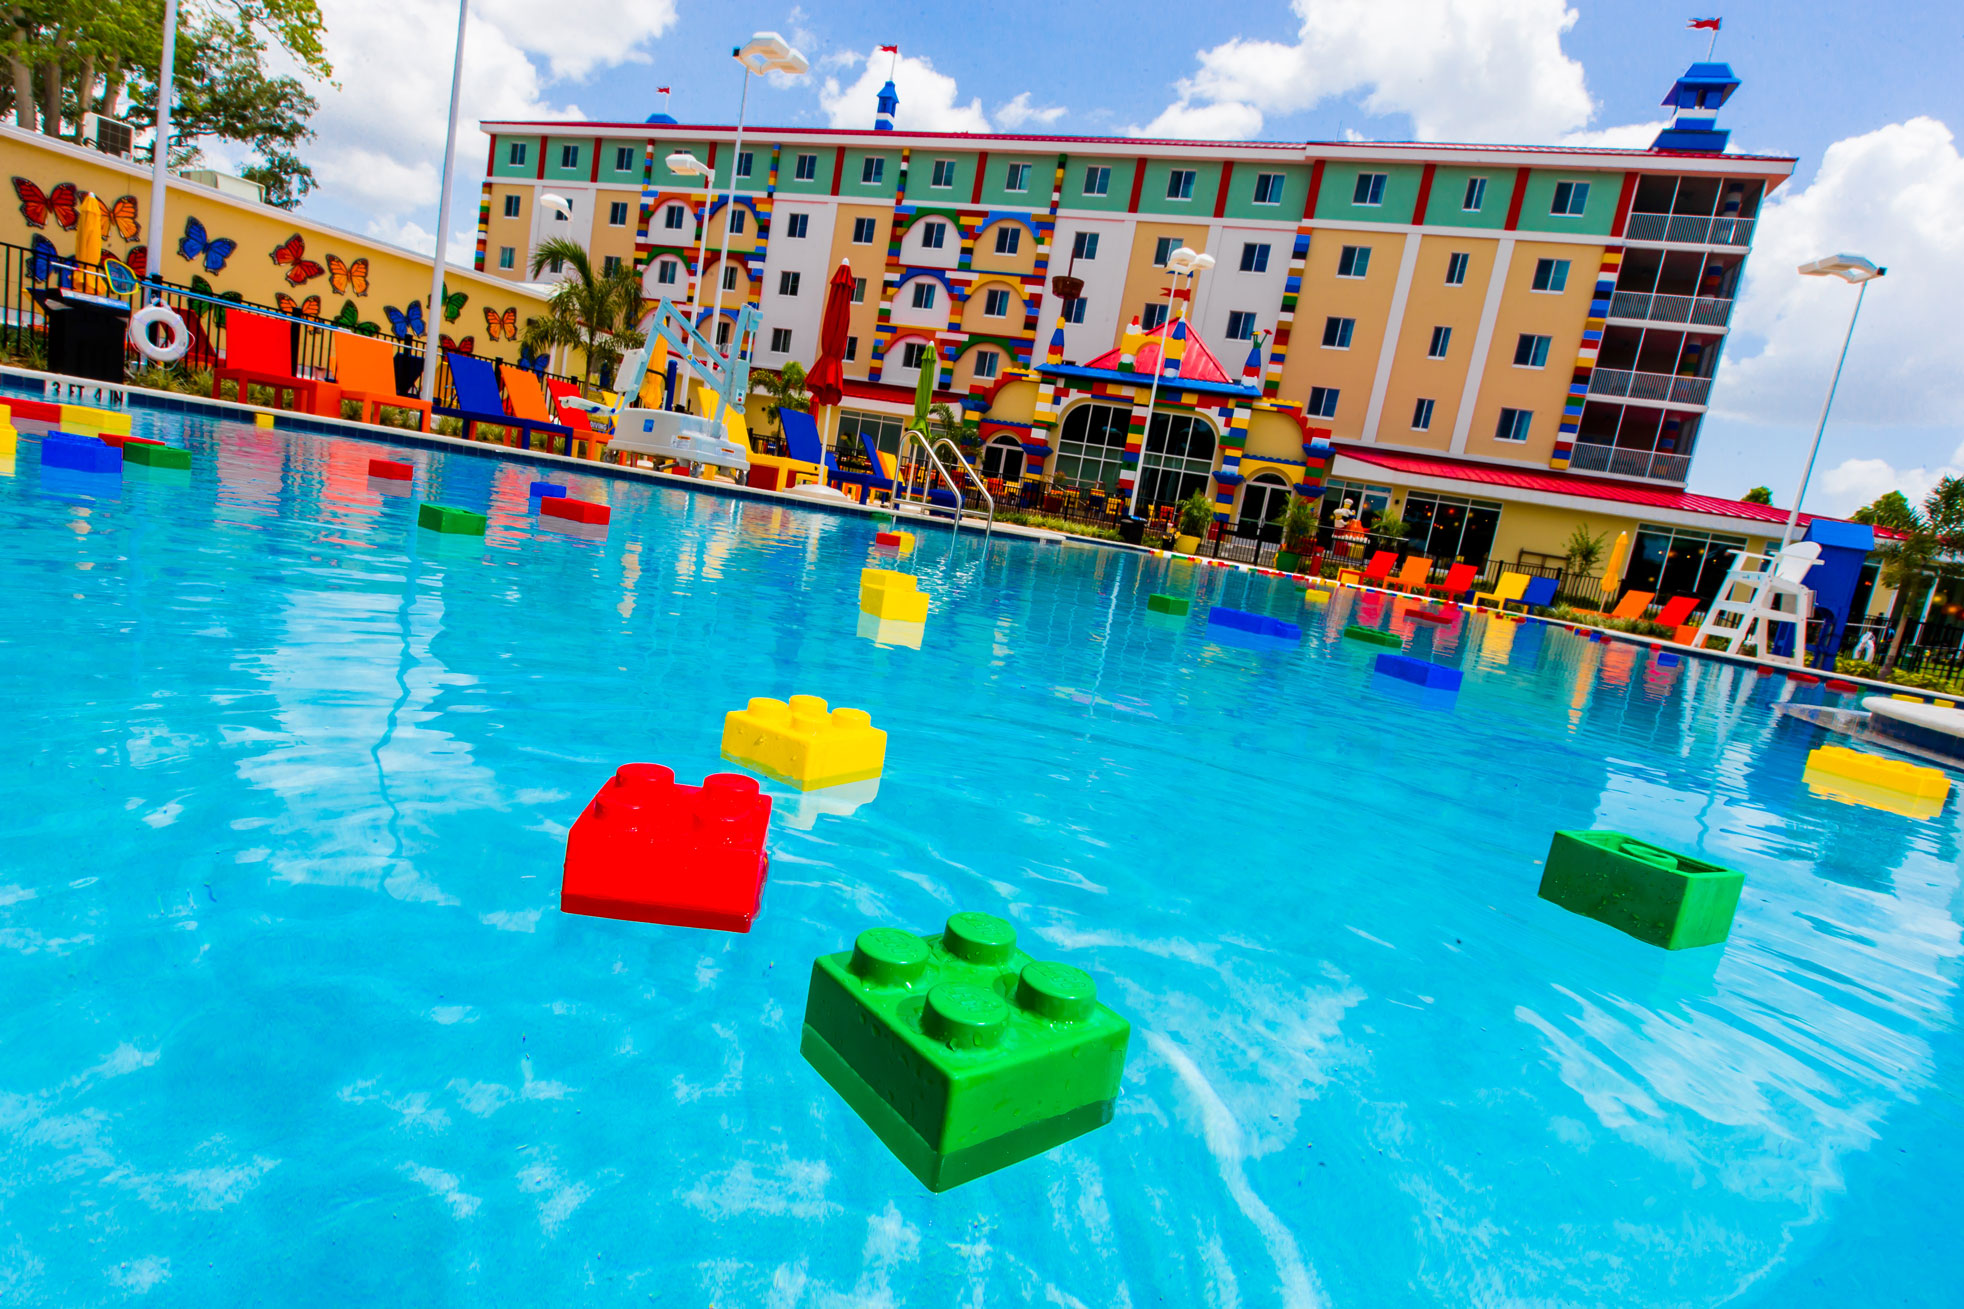 Legoland Hotel, Vacation Planning